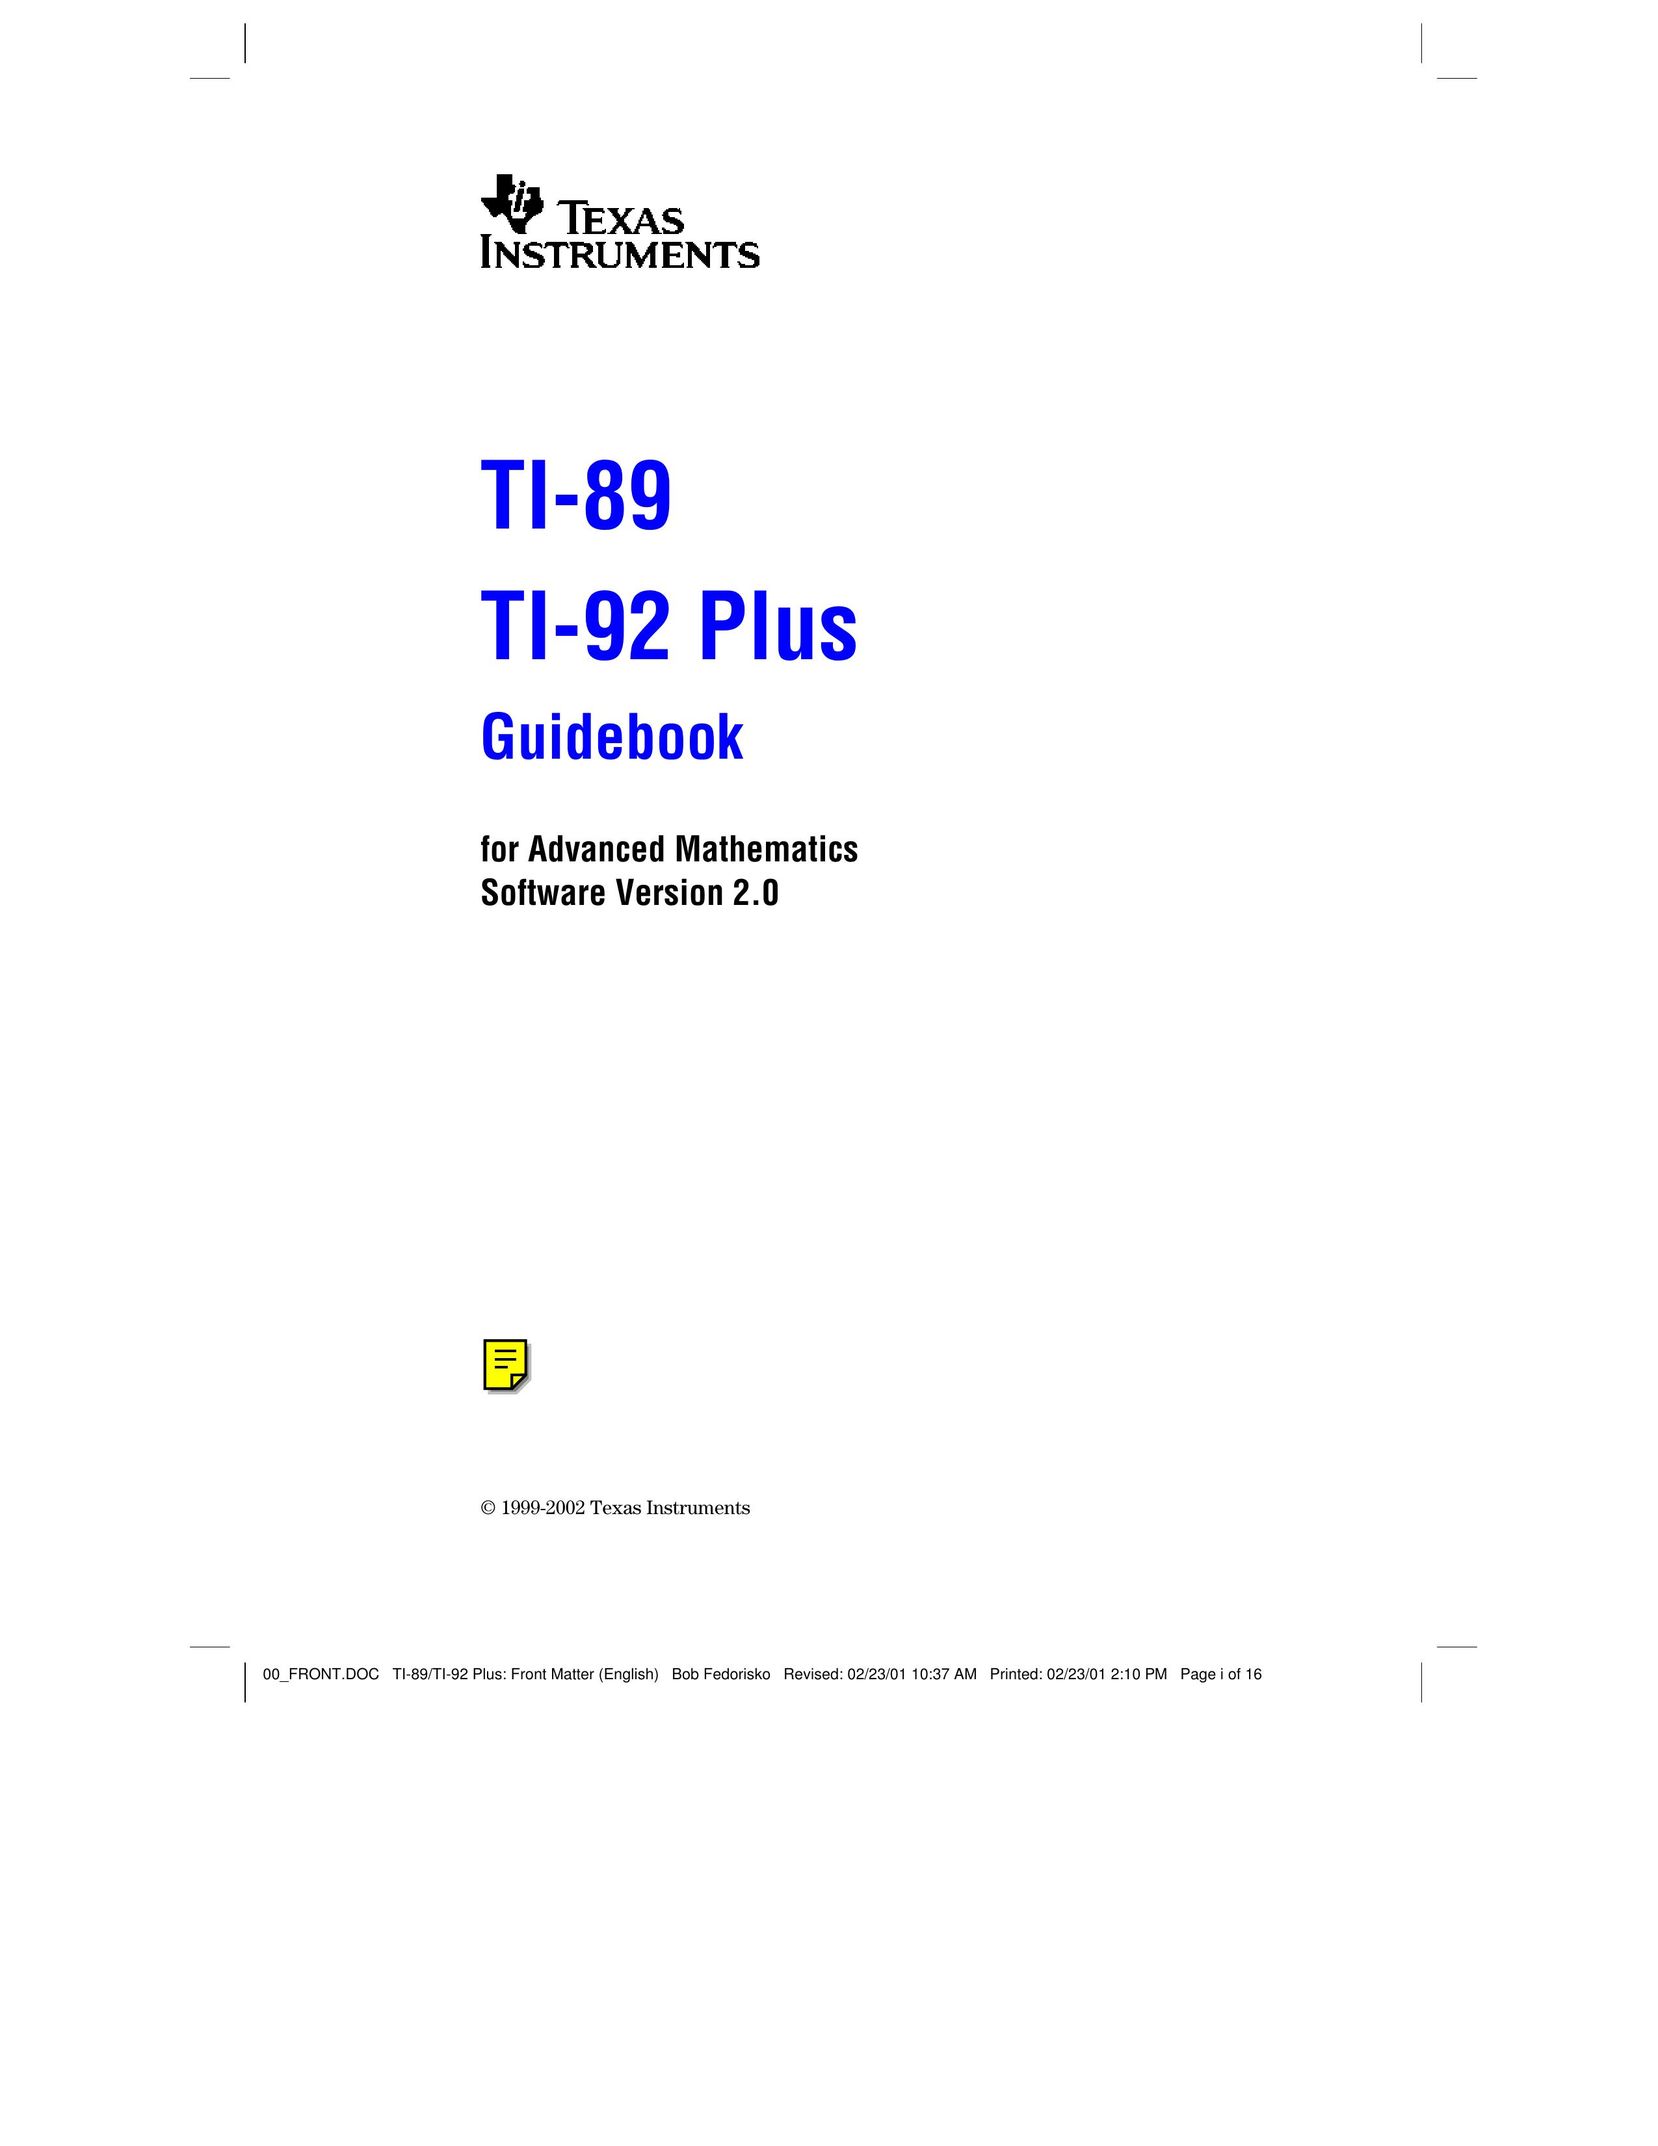 Texas Instruments TI-92 Calculator User Manual